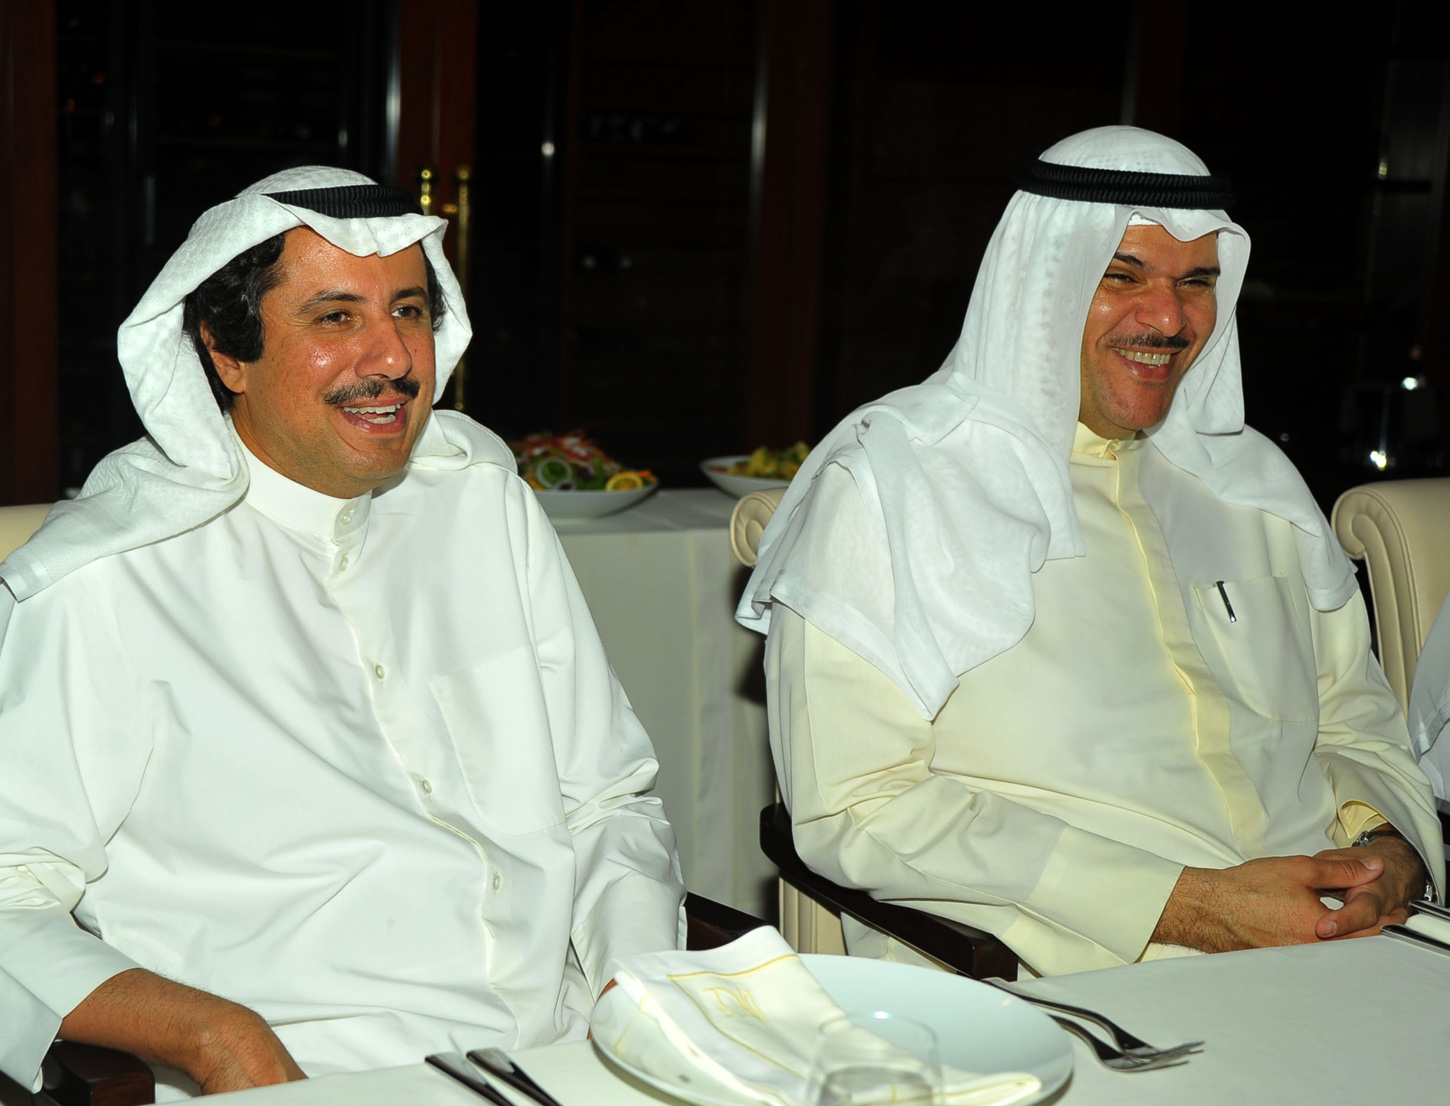 Minister of inf. Sheikh Salman Al-Sabah with Kuwait Ambassador to Manama Sheikh Azzam Al-Sabah during the banquet